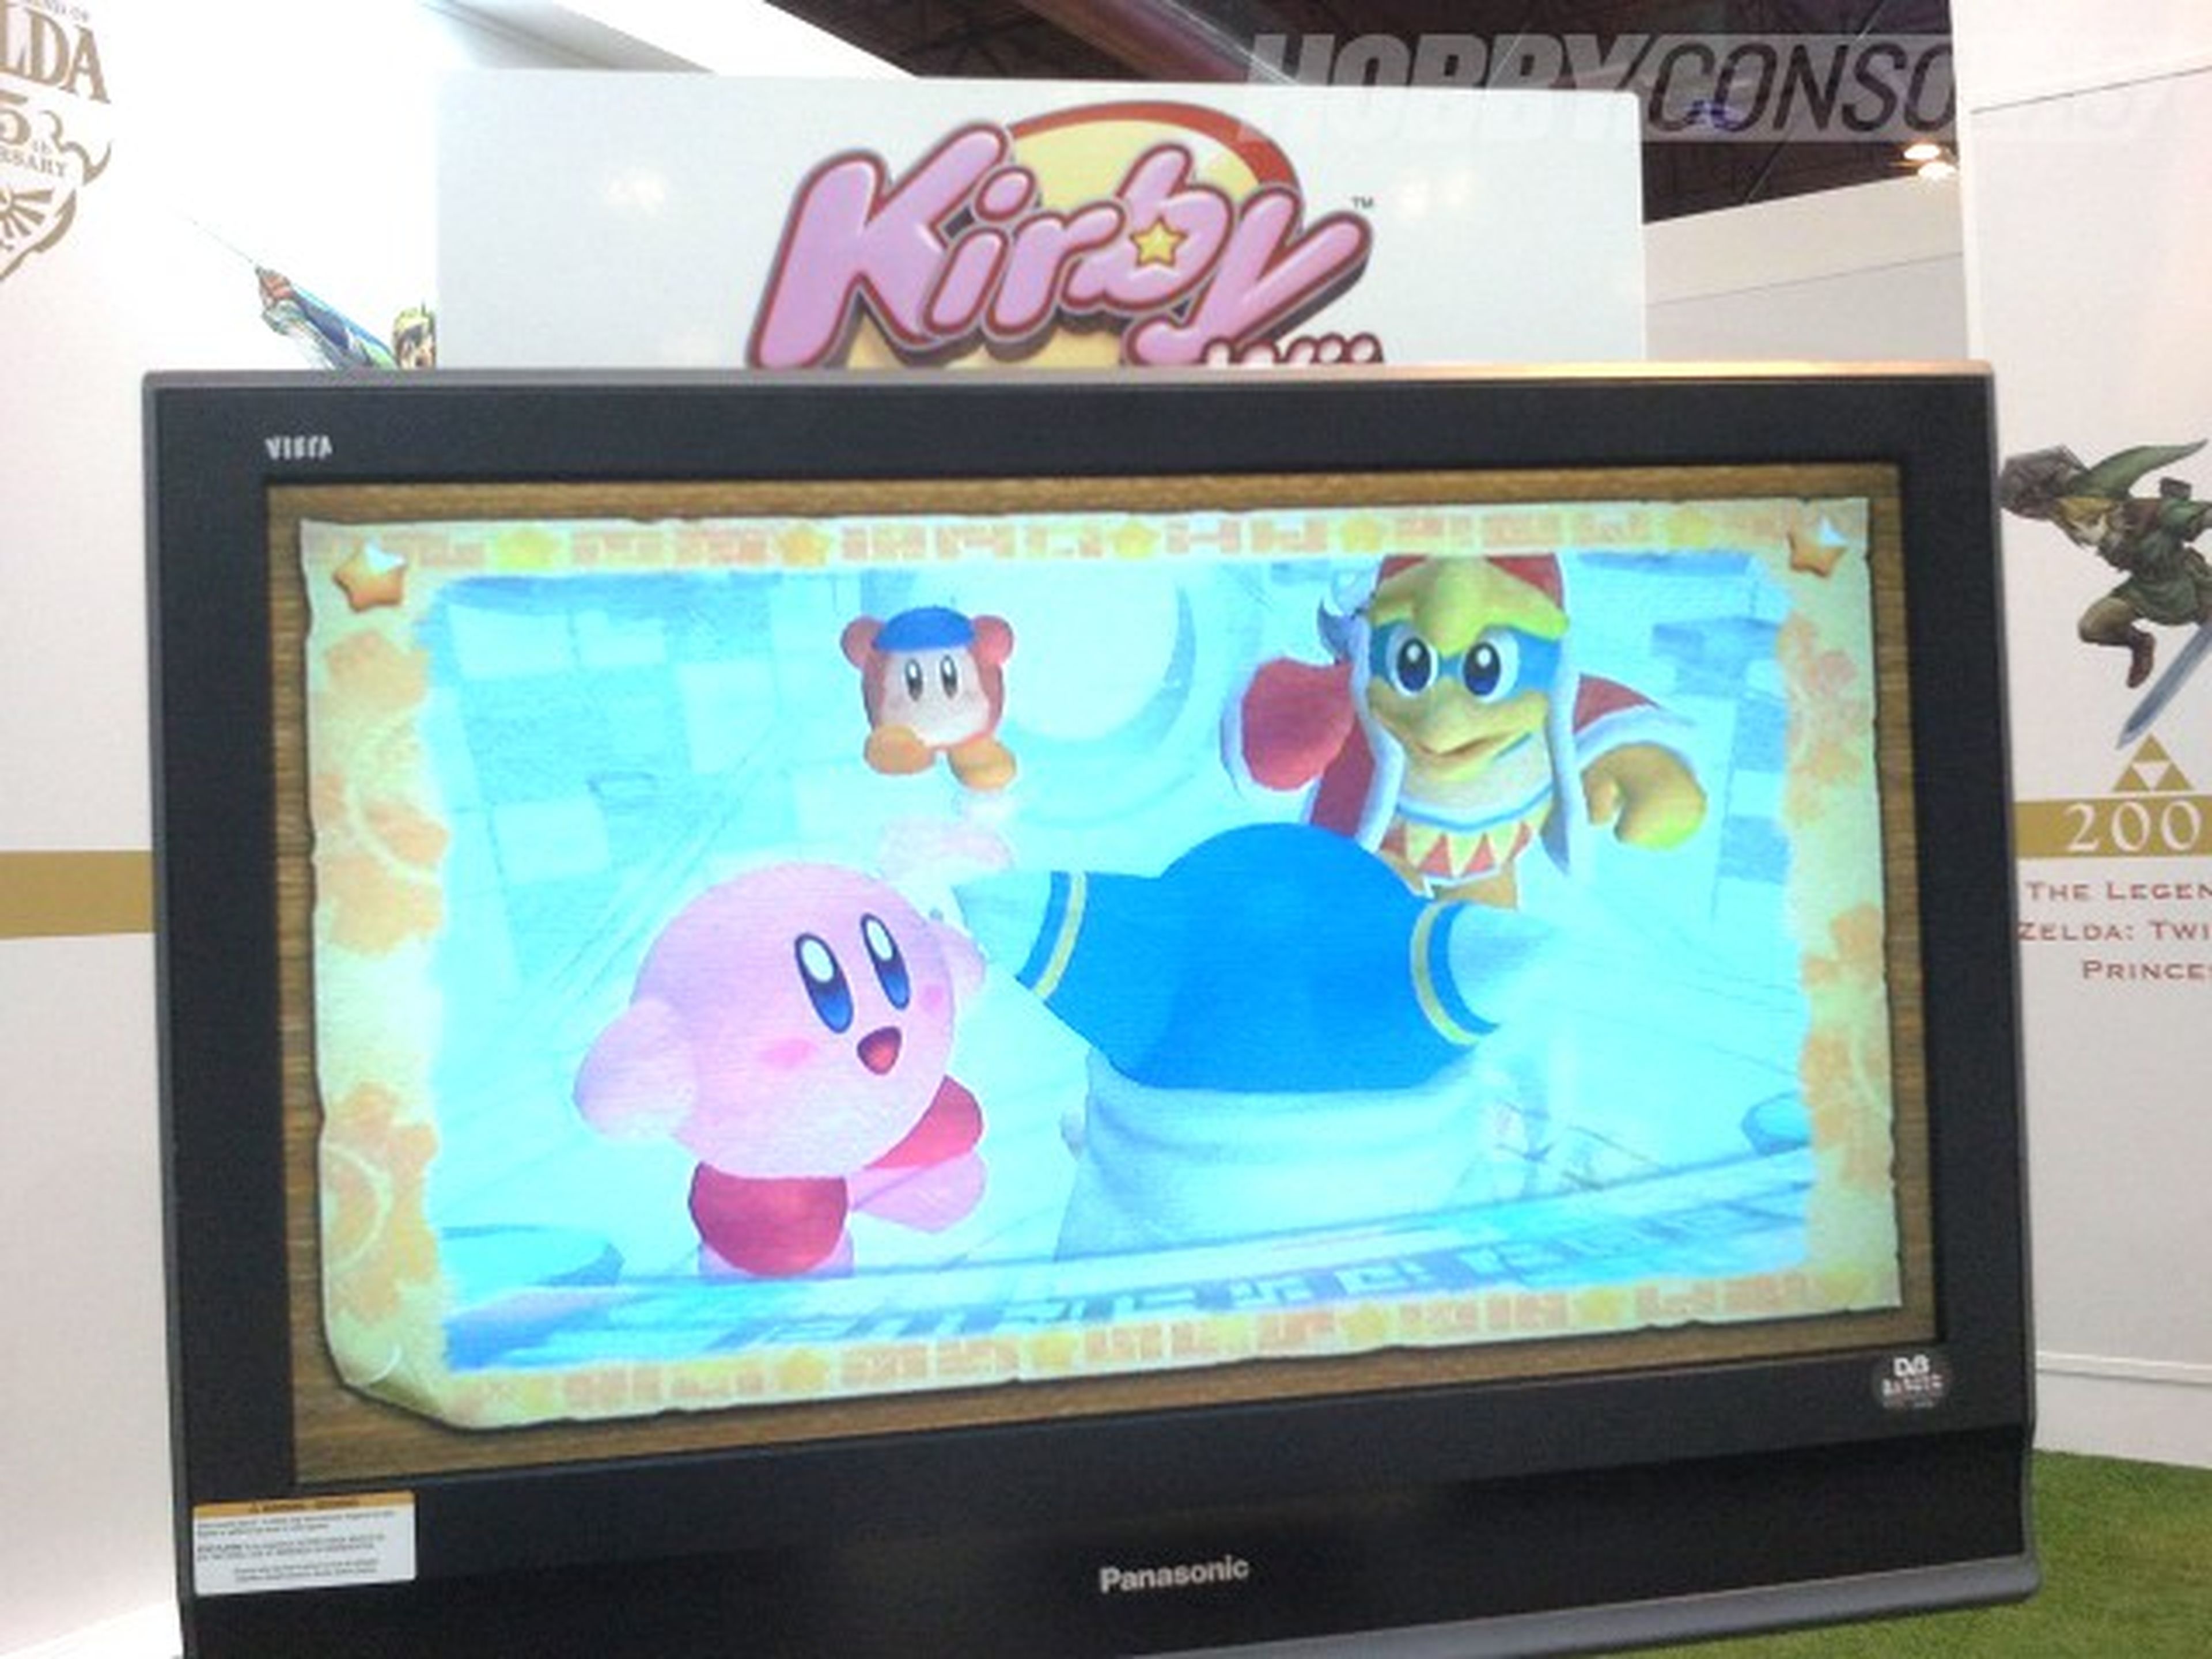 GAMESFEST: probado Kirby's Adventure